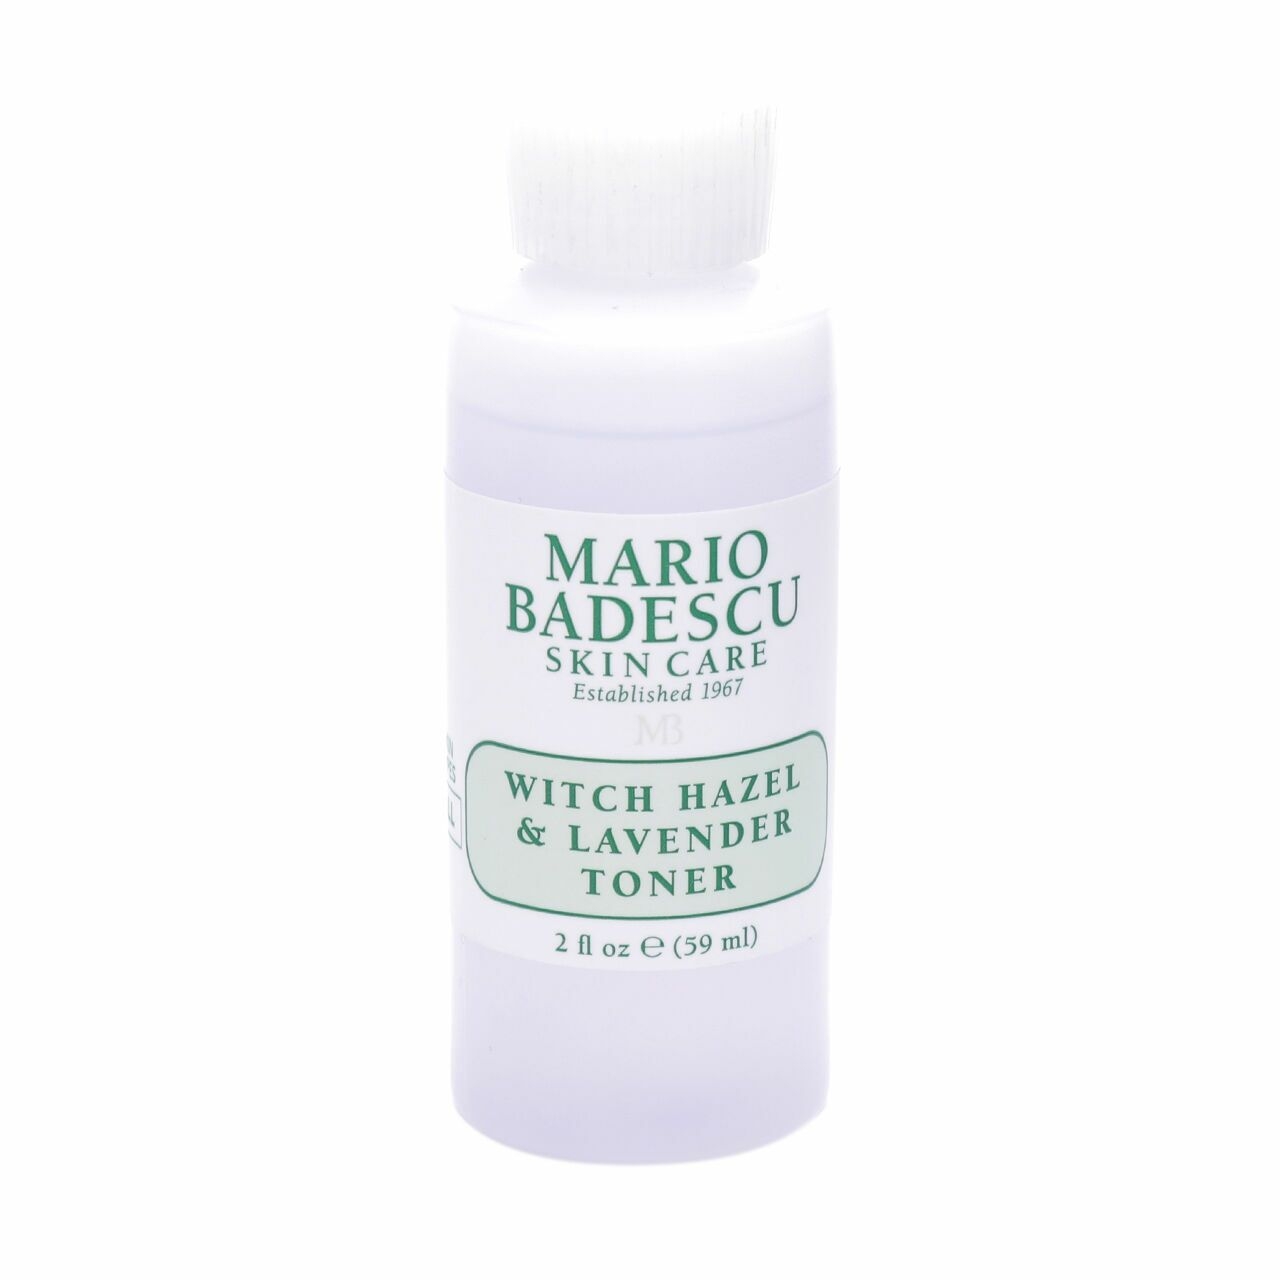 Mario Badescu Witch Hazel & Lavender Toner Skin Care